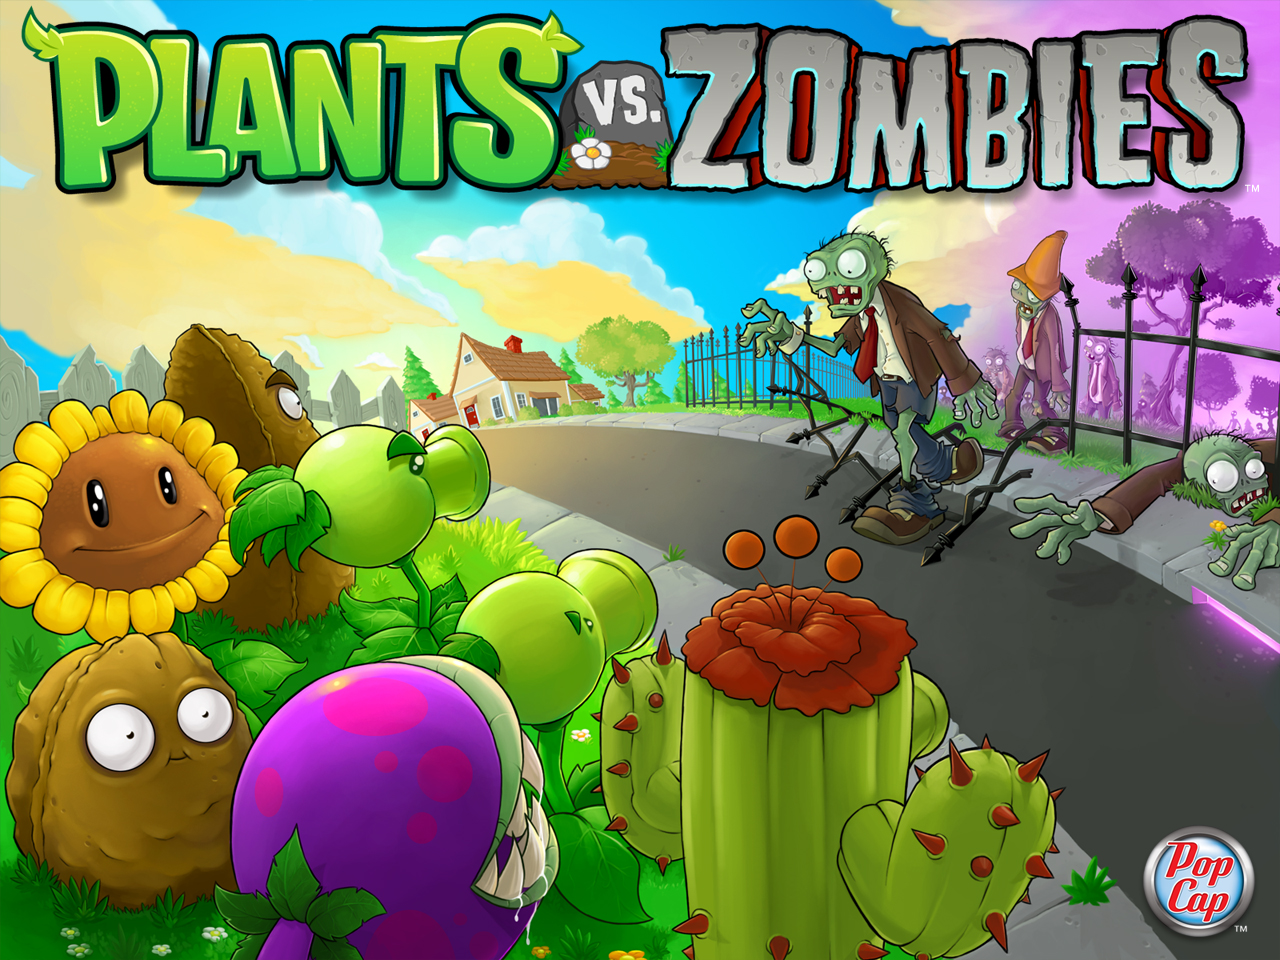 tempat download game pc full version gratis: Plant vs Zombie full game ...